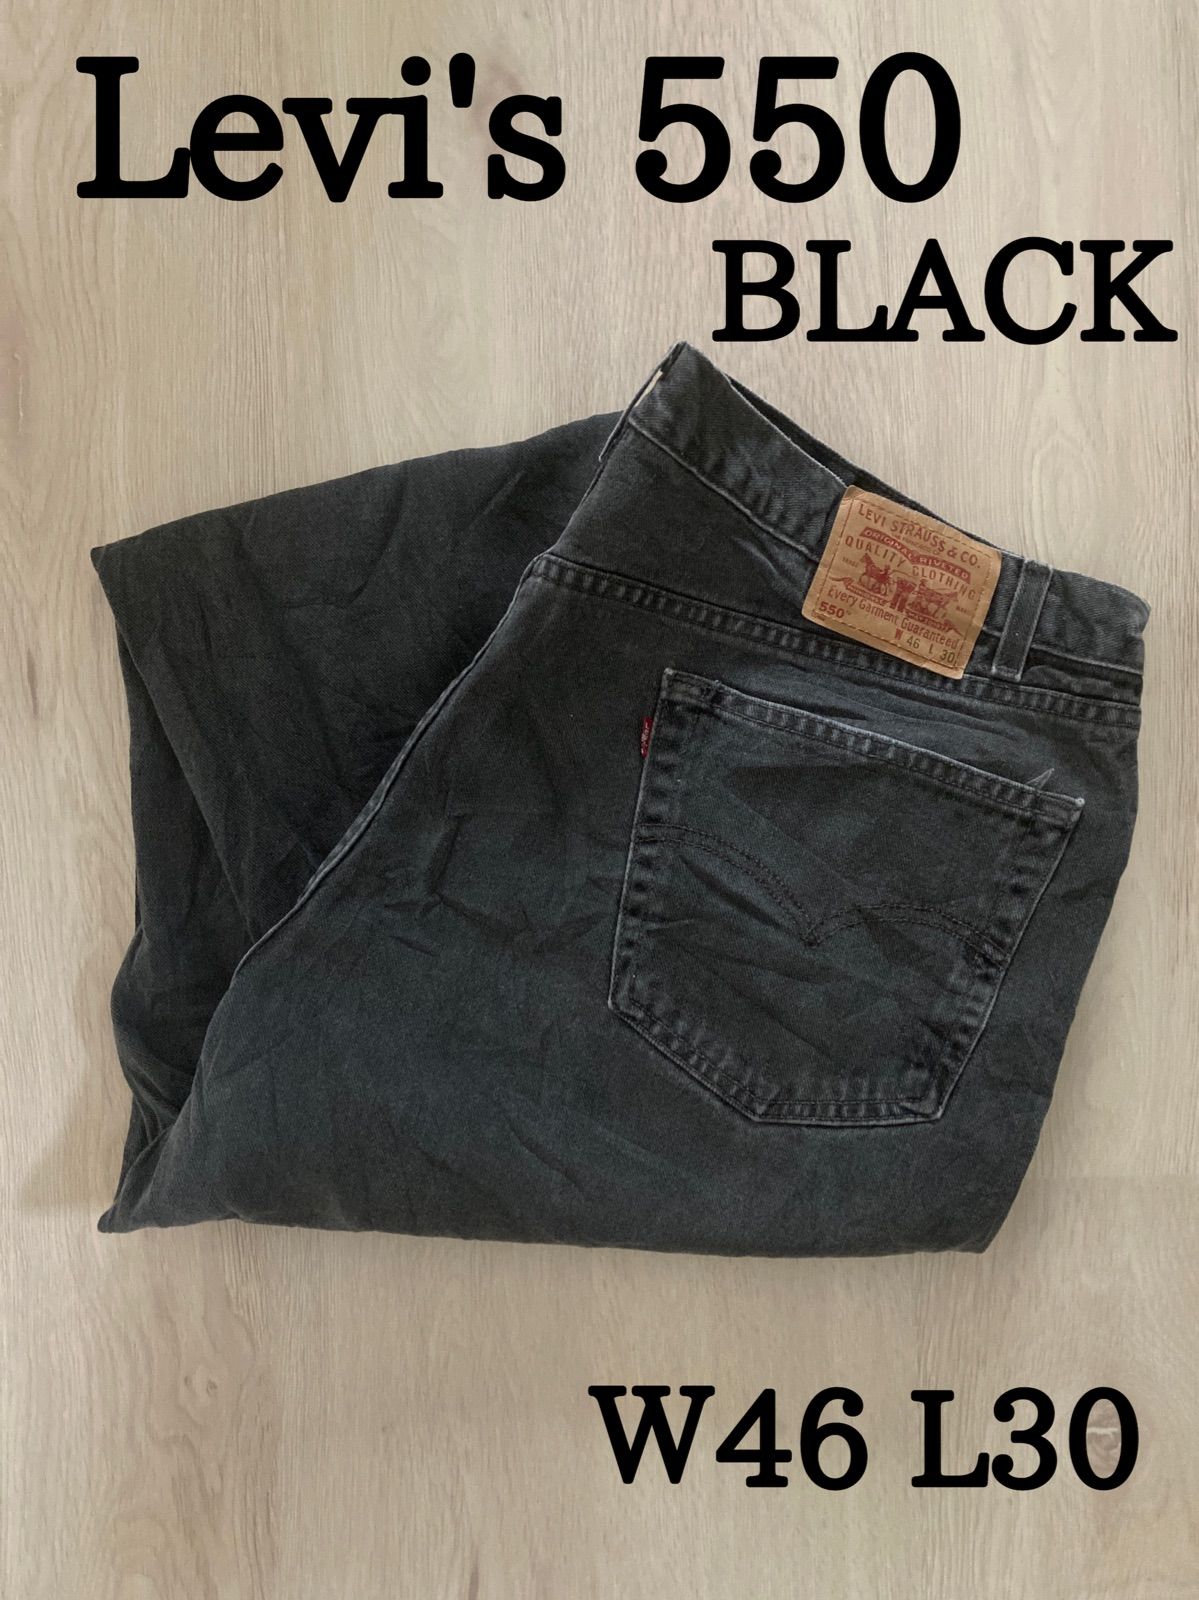 47【Levi's 550 BLACK】W46 L30 ブラック ワイド バギー - メルカリShops